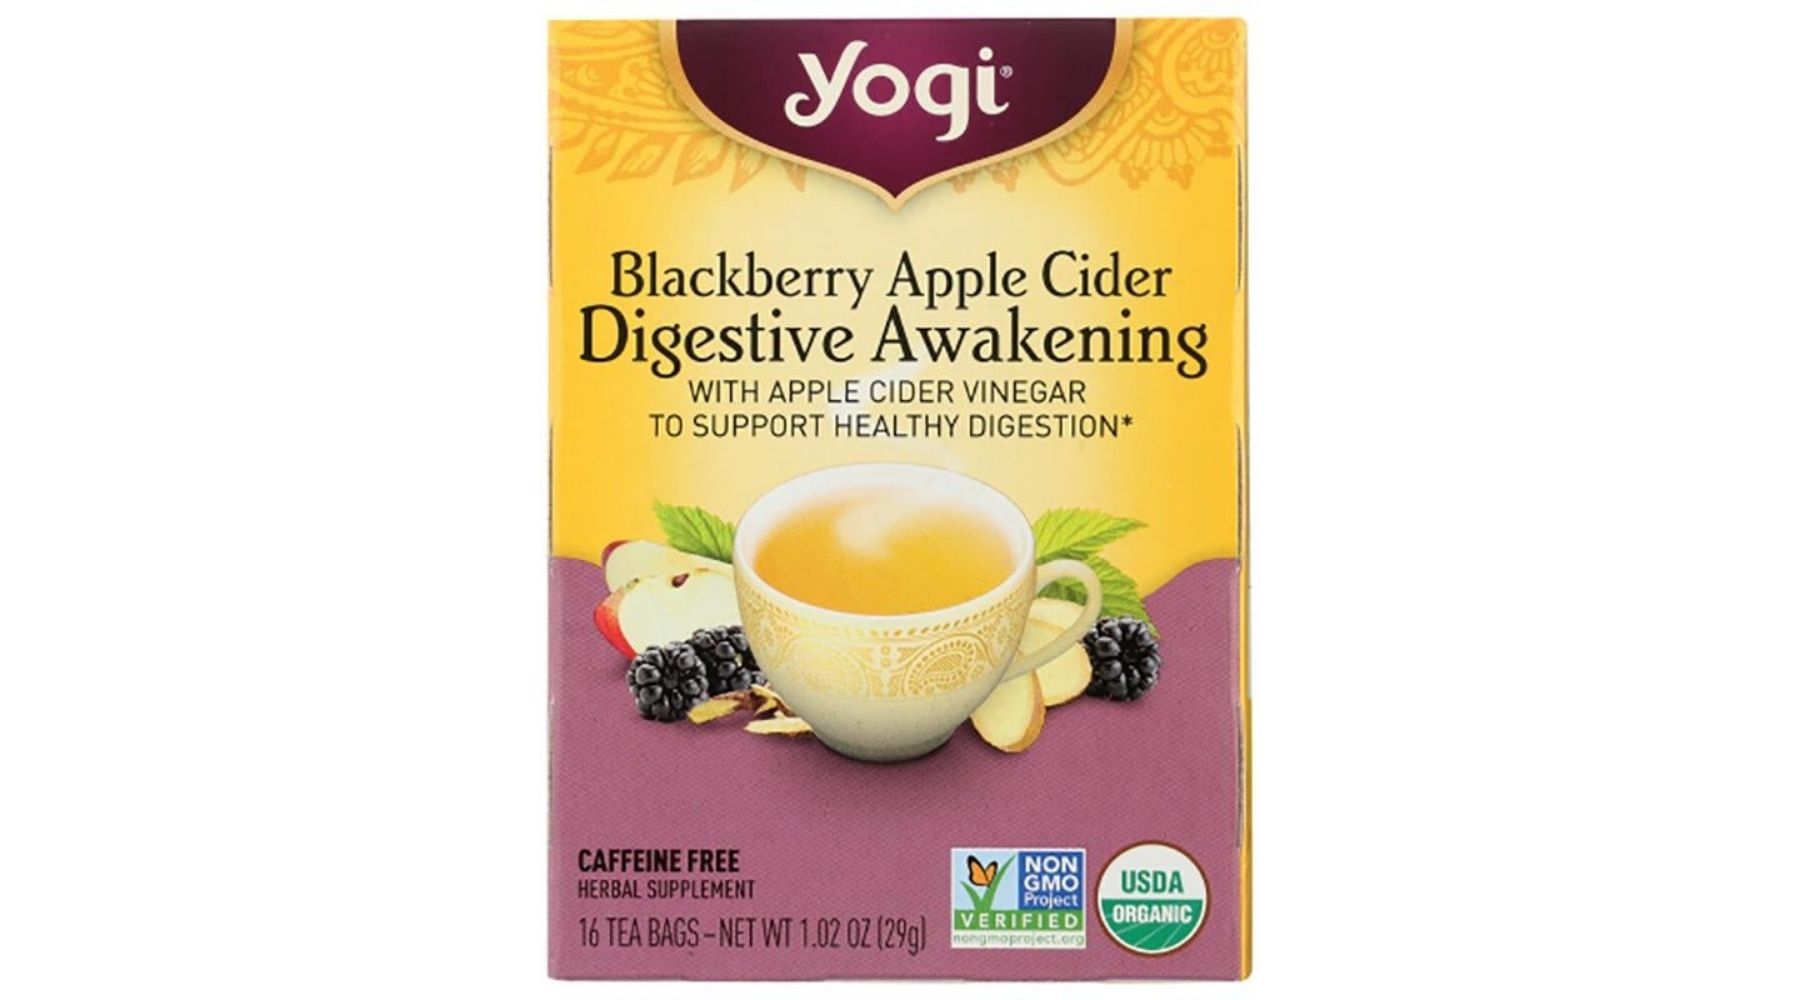 Yogi Tea - Blackberry Apple Cider Digestive Awakening, 16 Bags - buy now